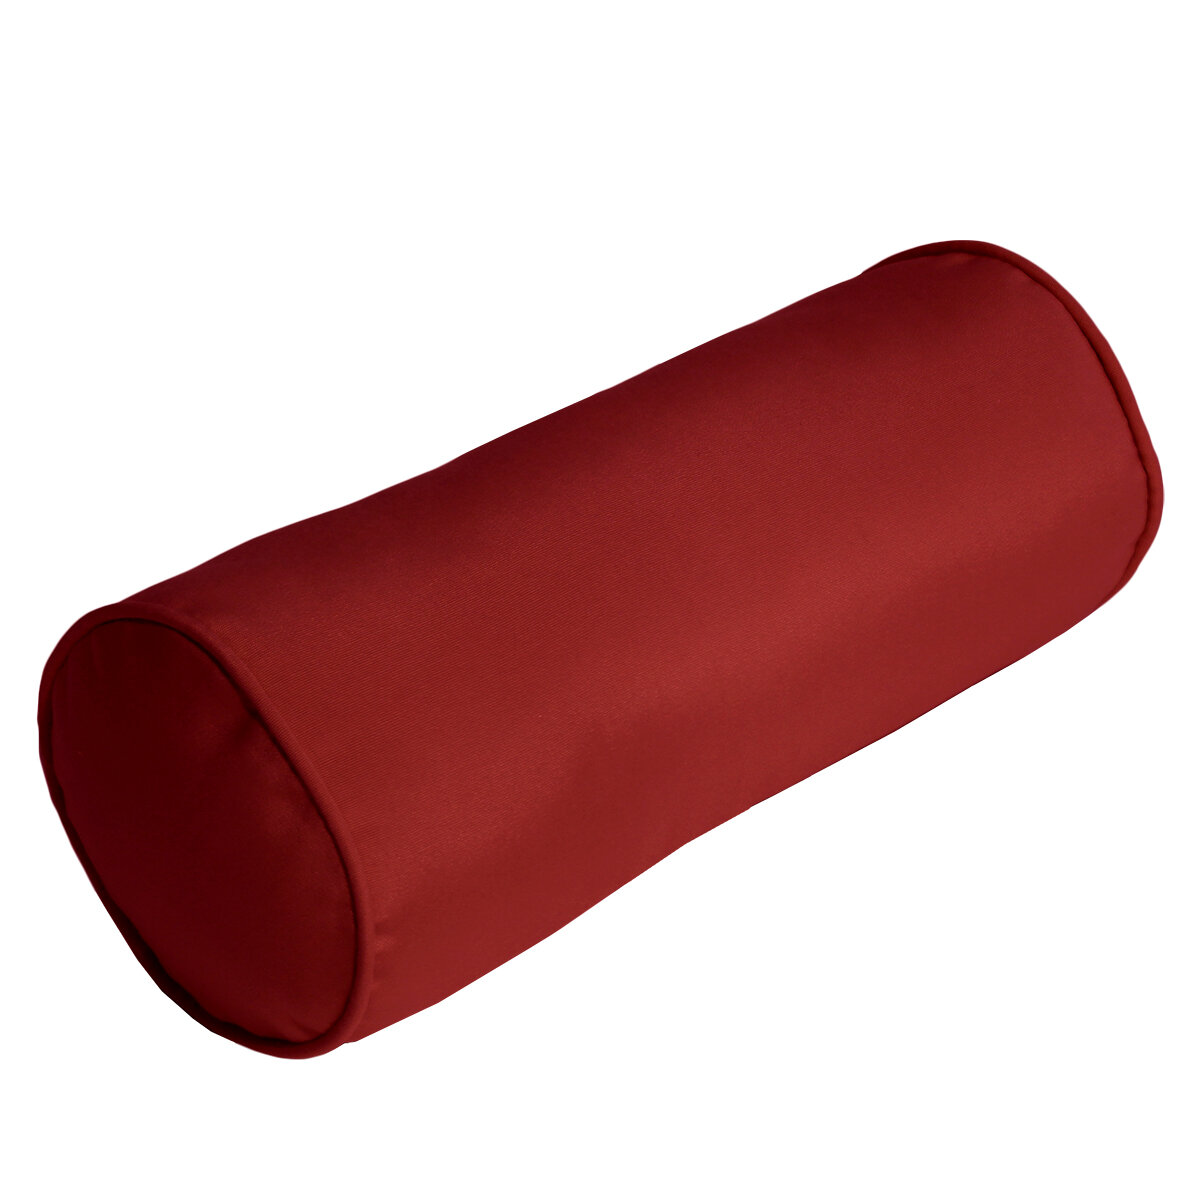 red bolster pillow